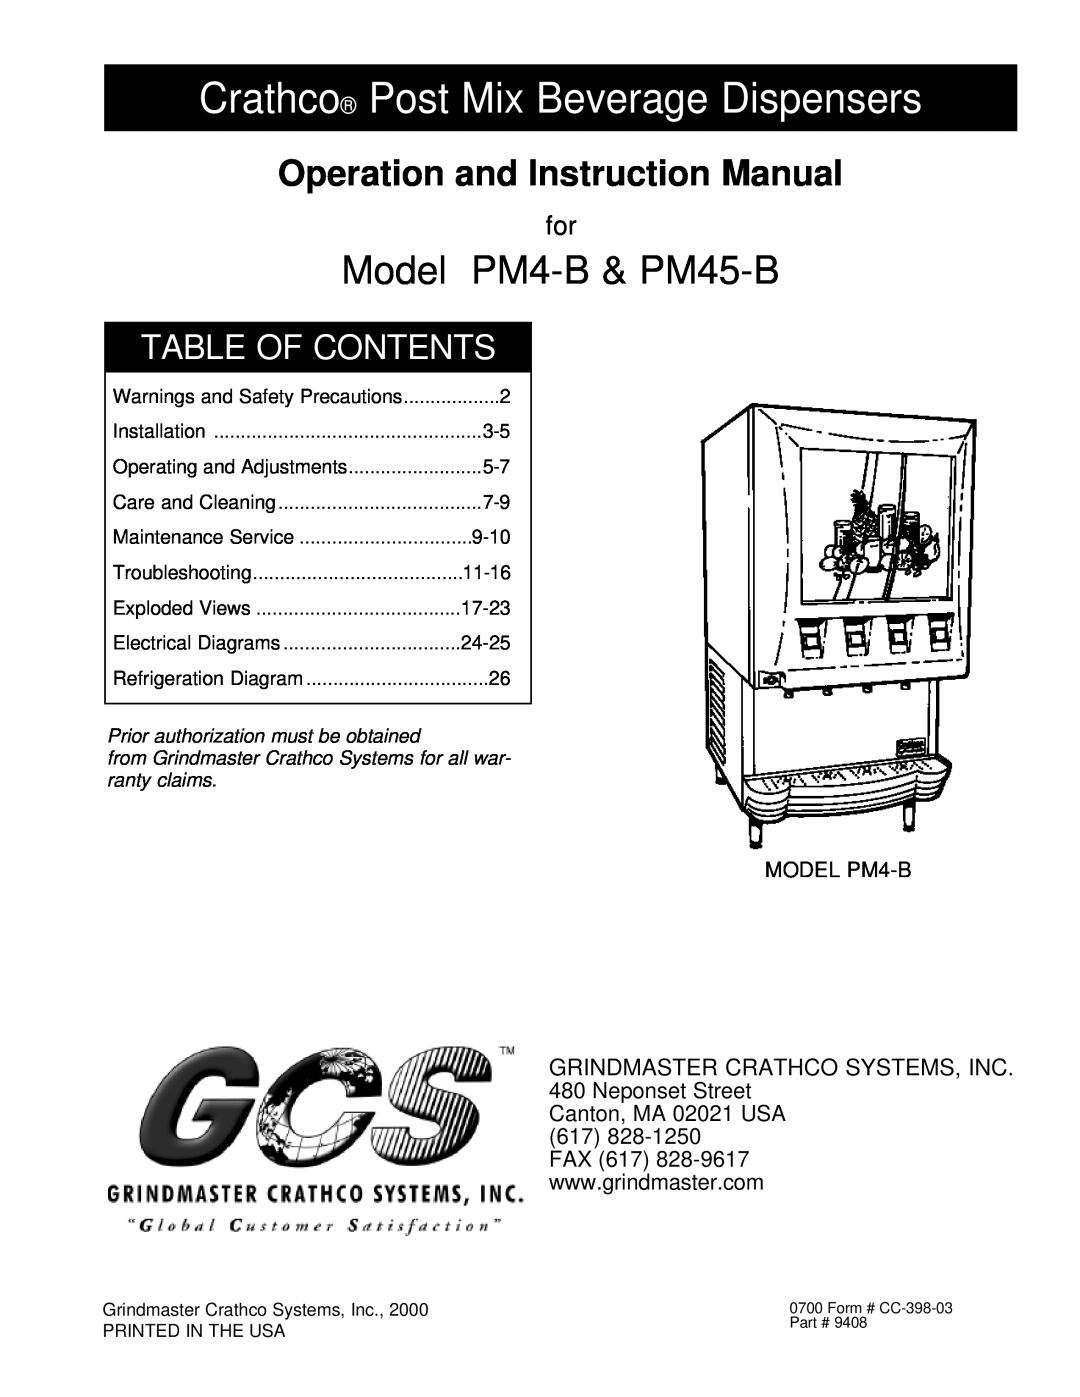 Grindmaster instruction manual MODEL PM4-B, Crathco Post Mix Beverage Dispensers, Model PM4-B& PM45-B 